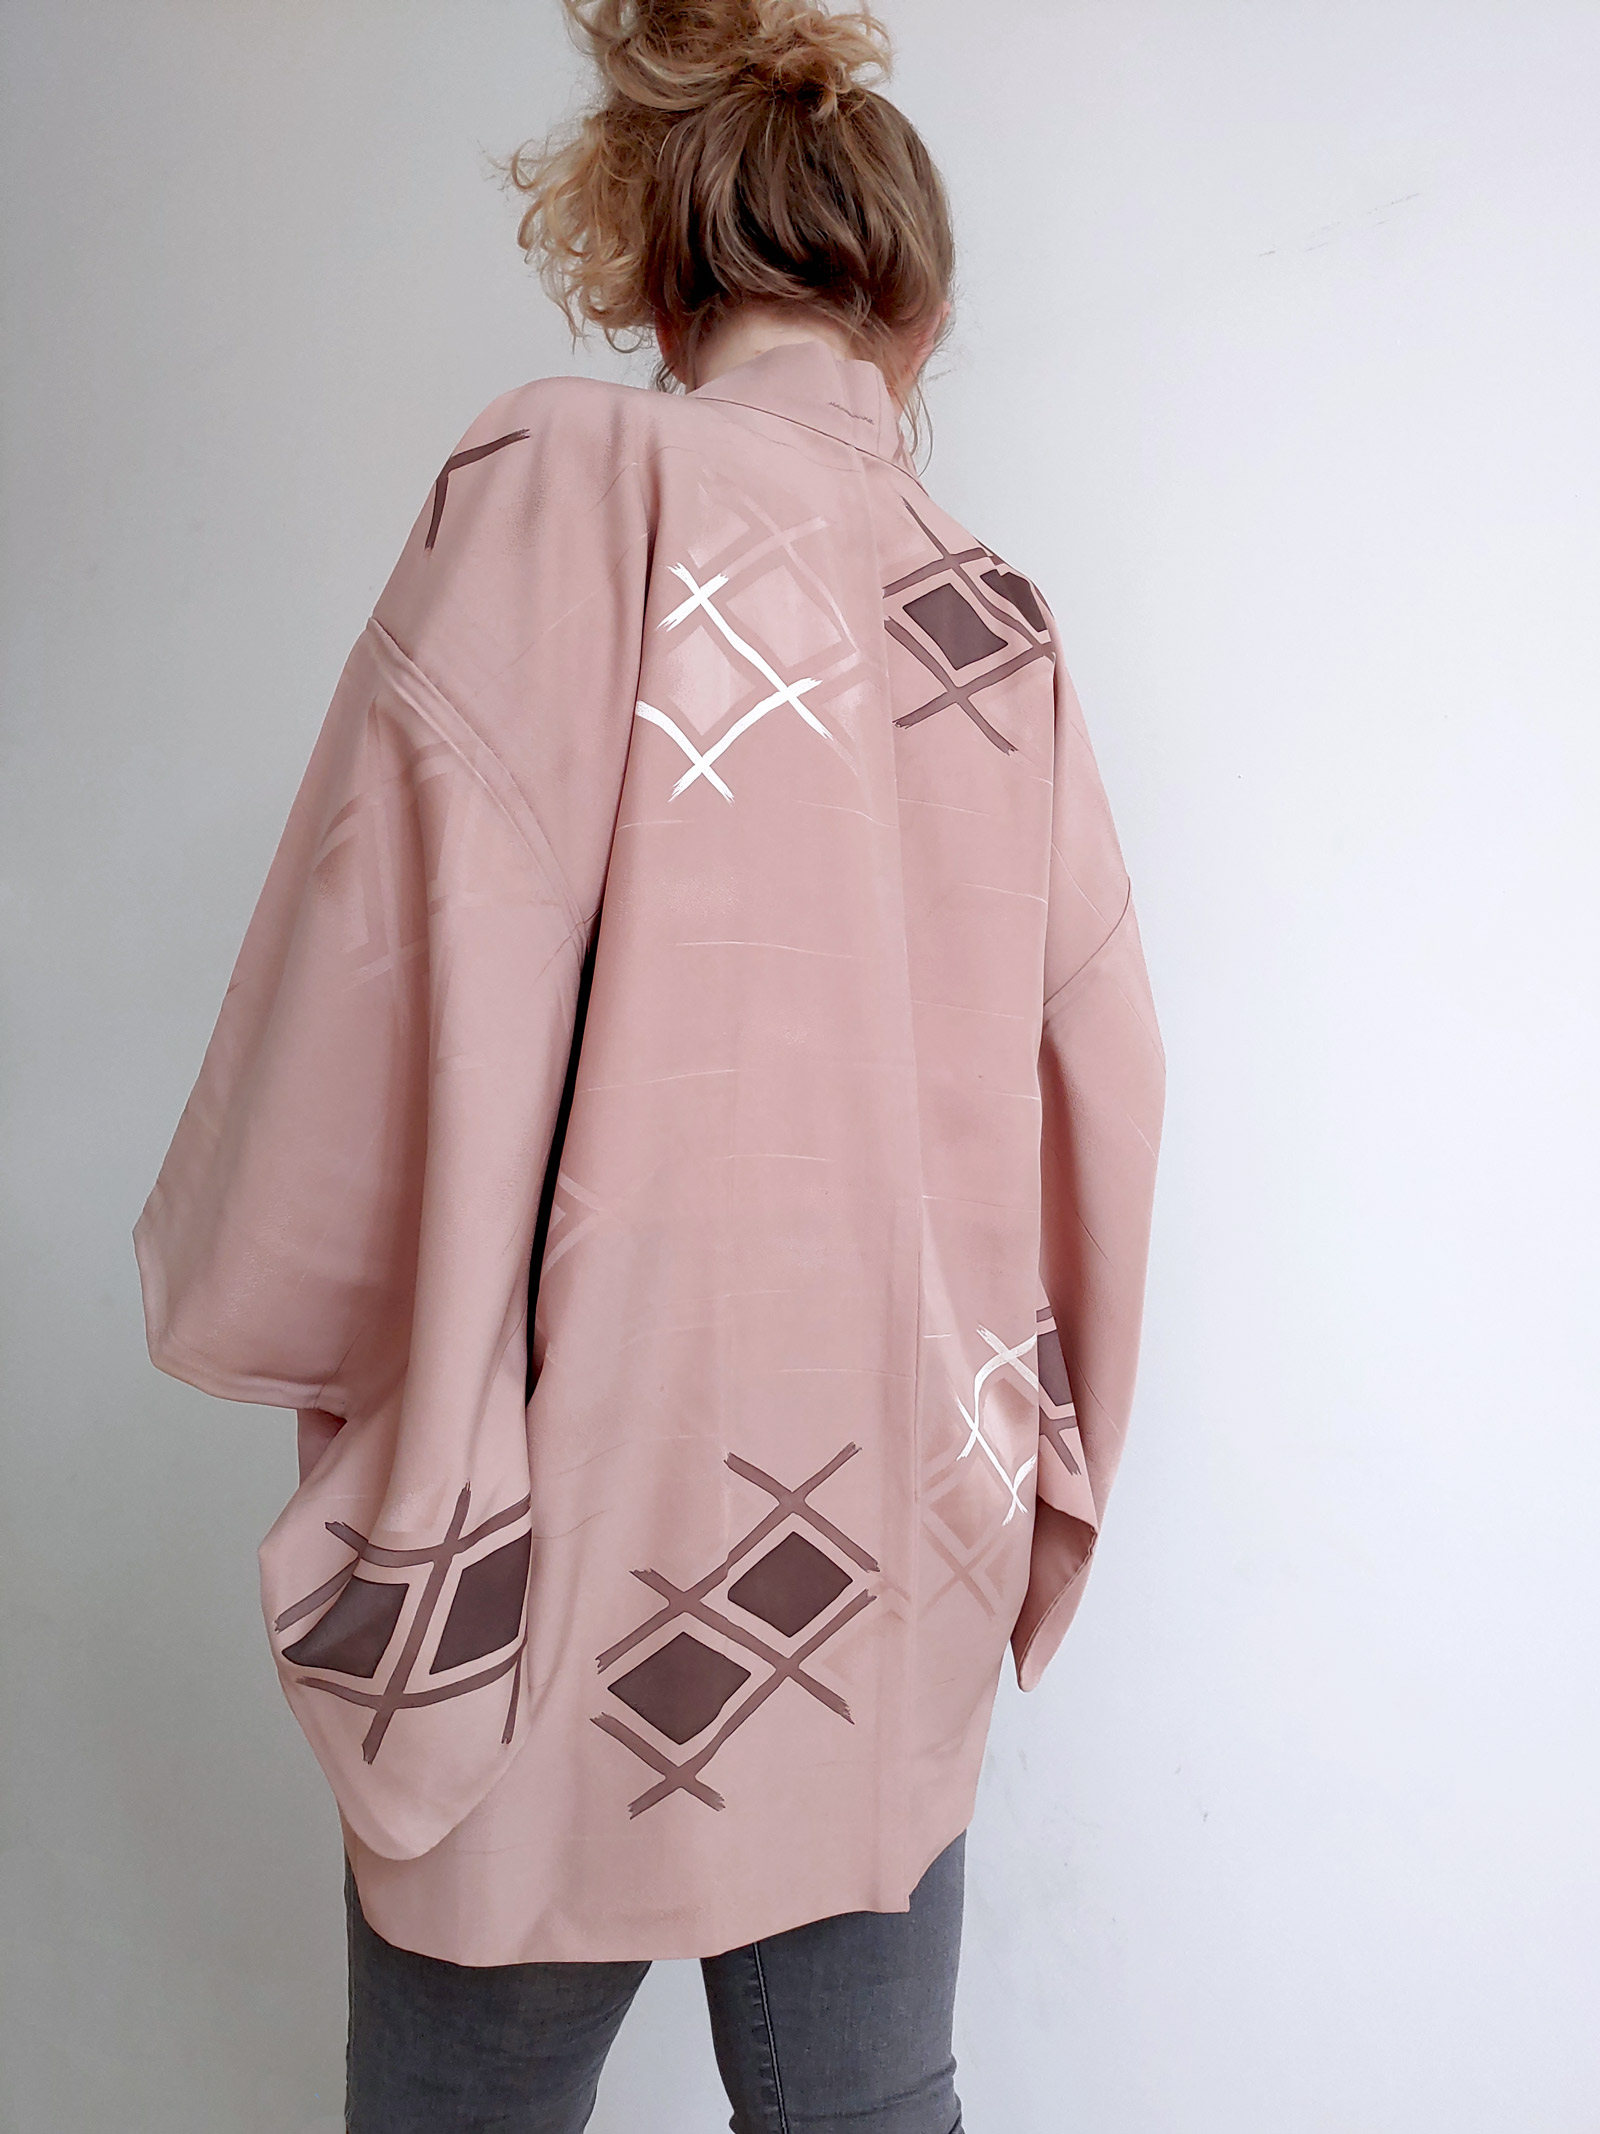 Nyoko – Short Kimono (Haori) in old rose with diamond shapes